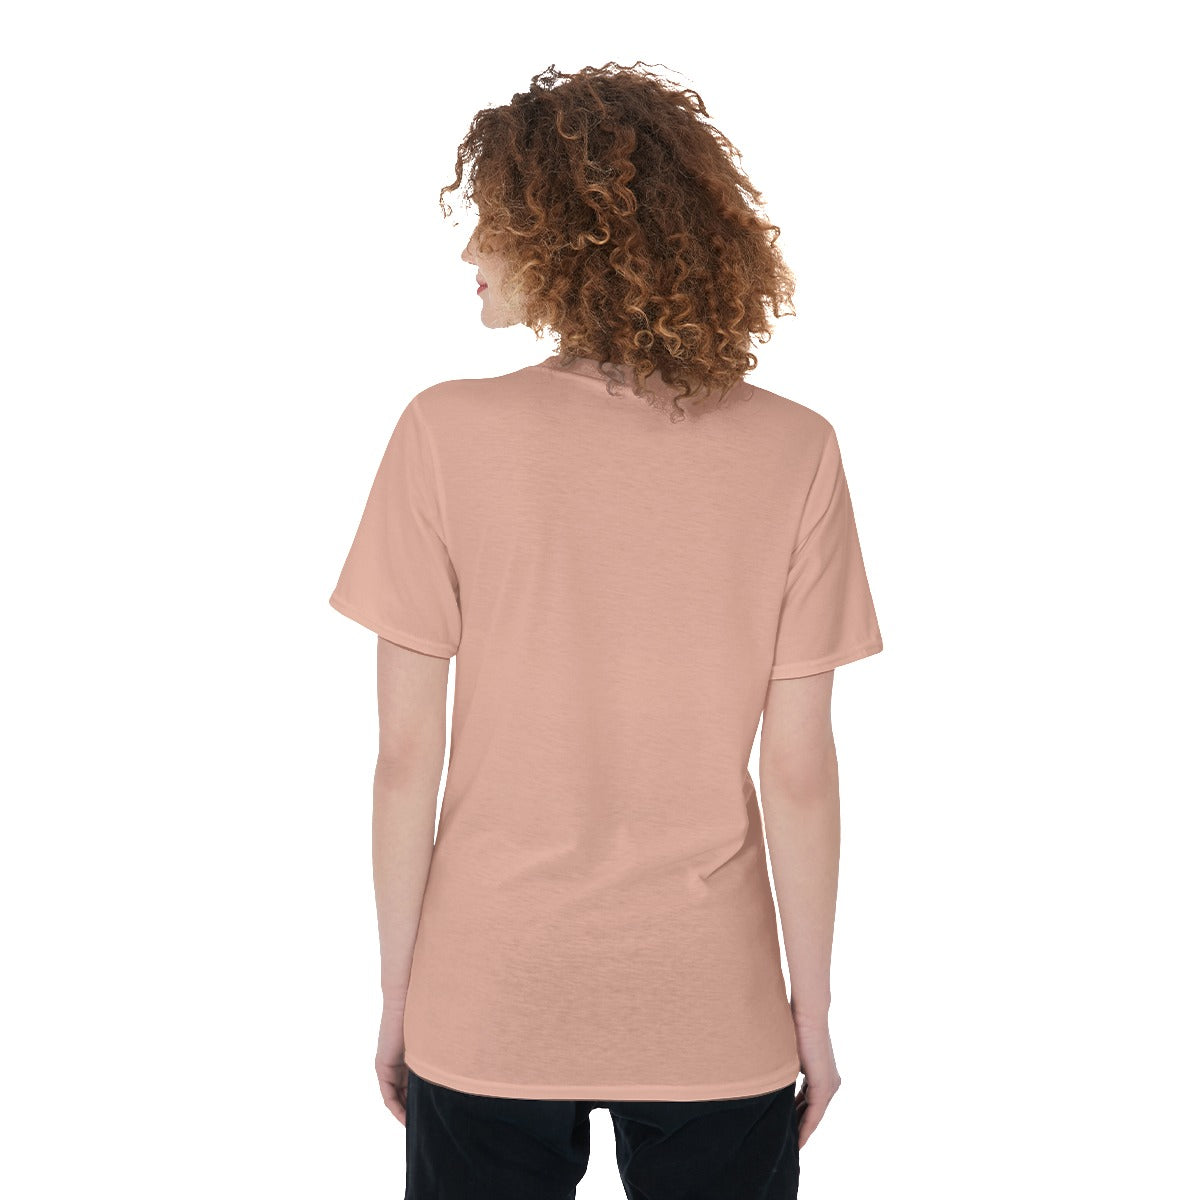 All-Over Print Women'S O-Neck T-Shirt